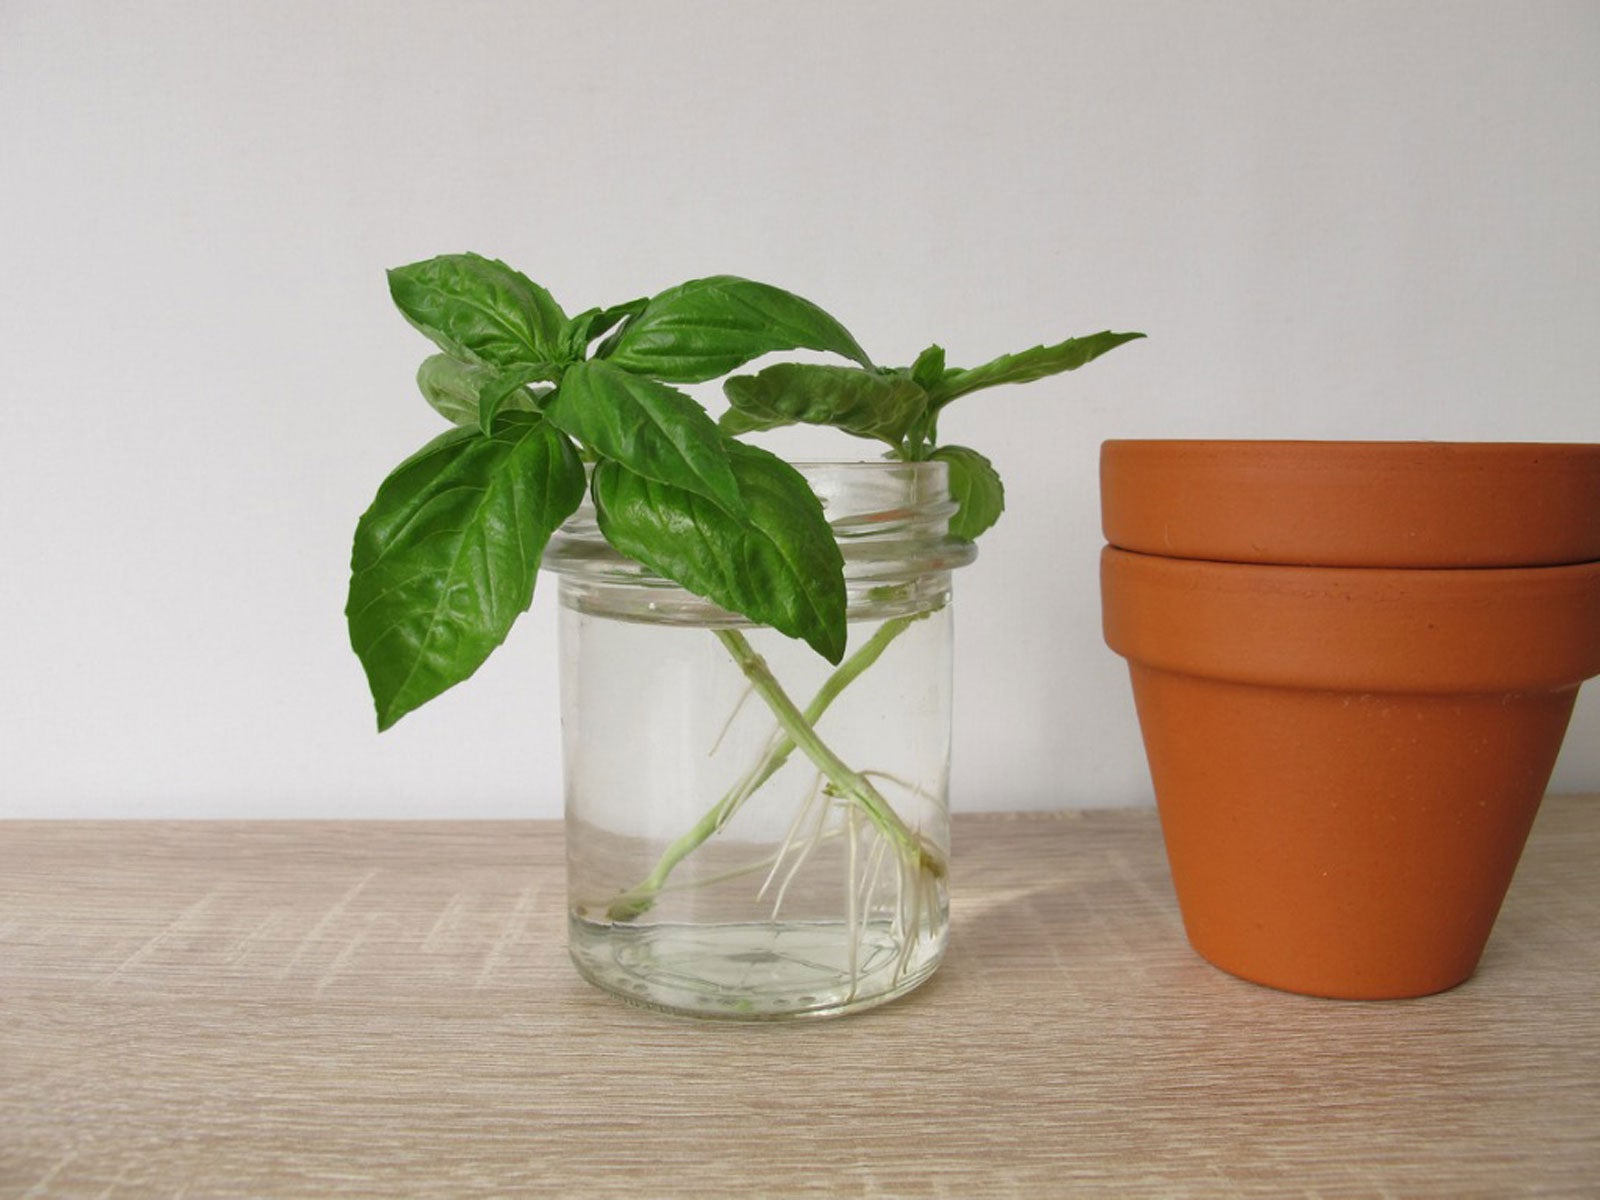 How to Propagate Basil Plants